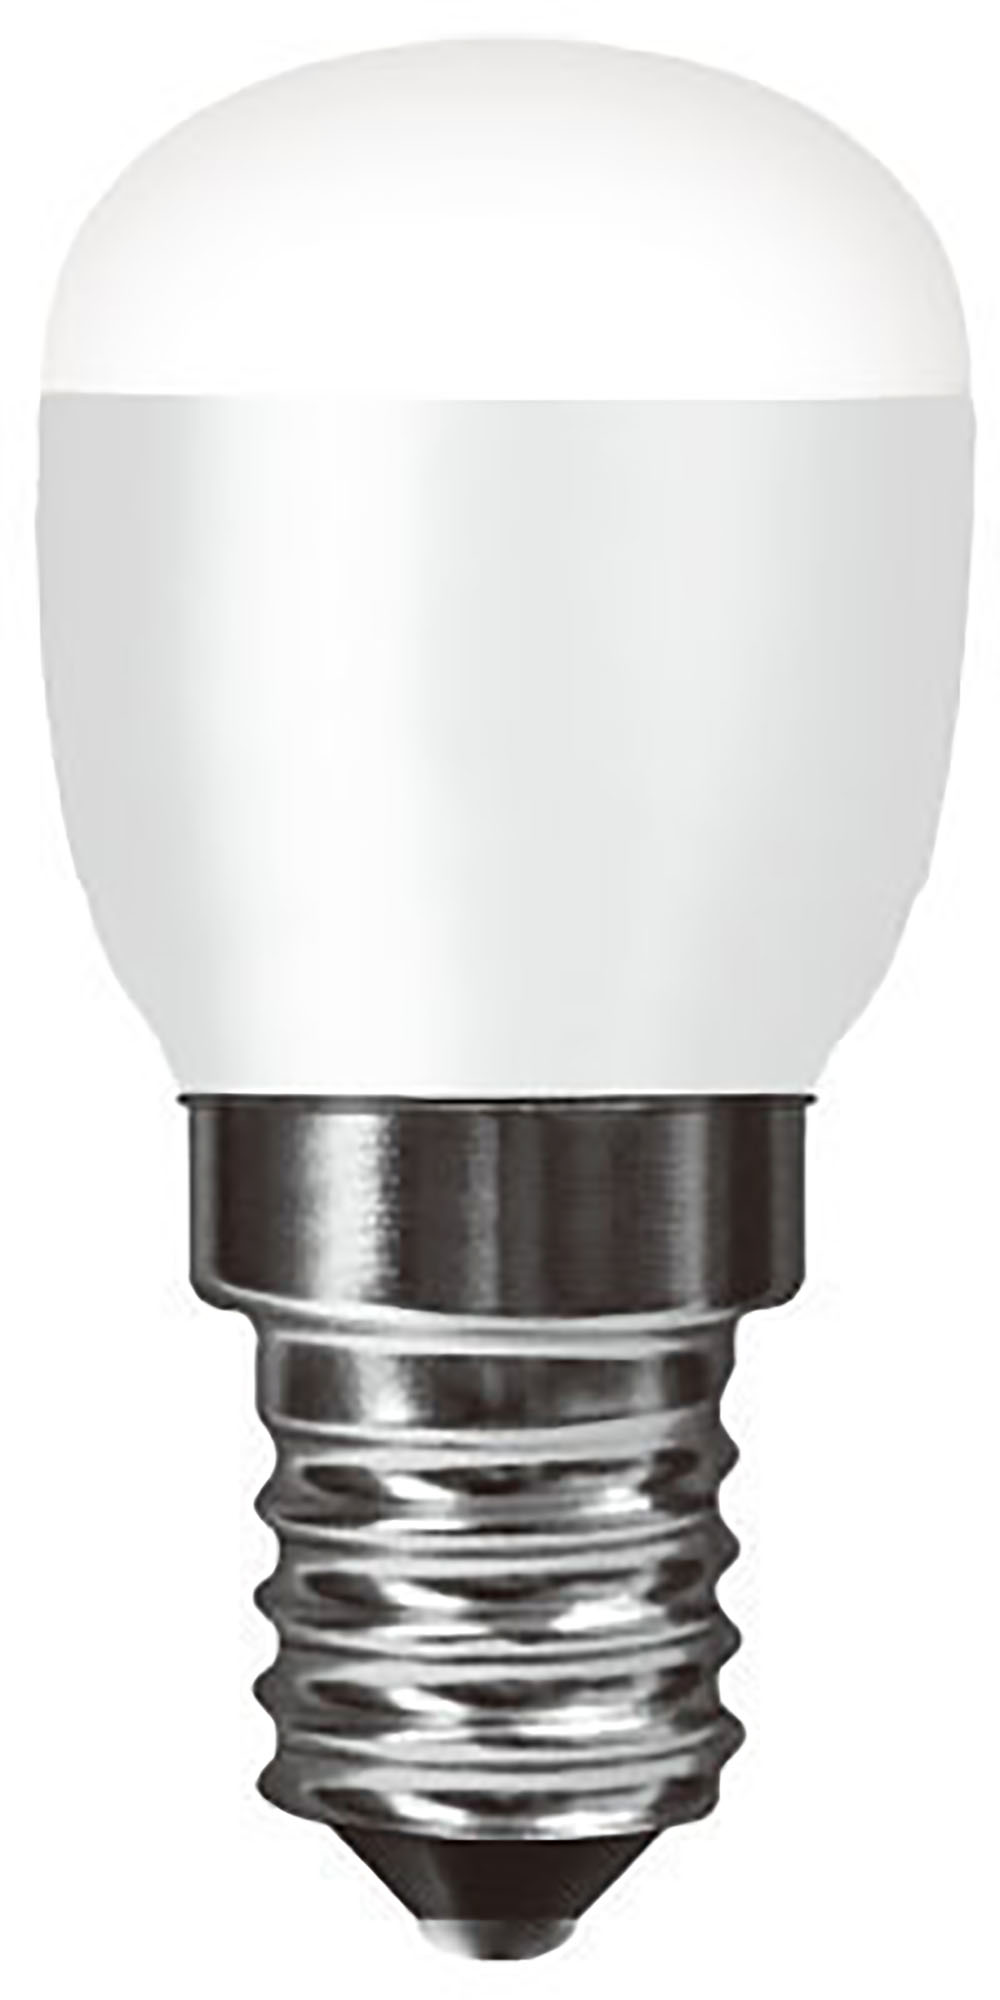 Pygmy LED Lamps Luxram Pygmy & Appliance